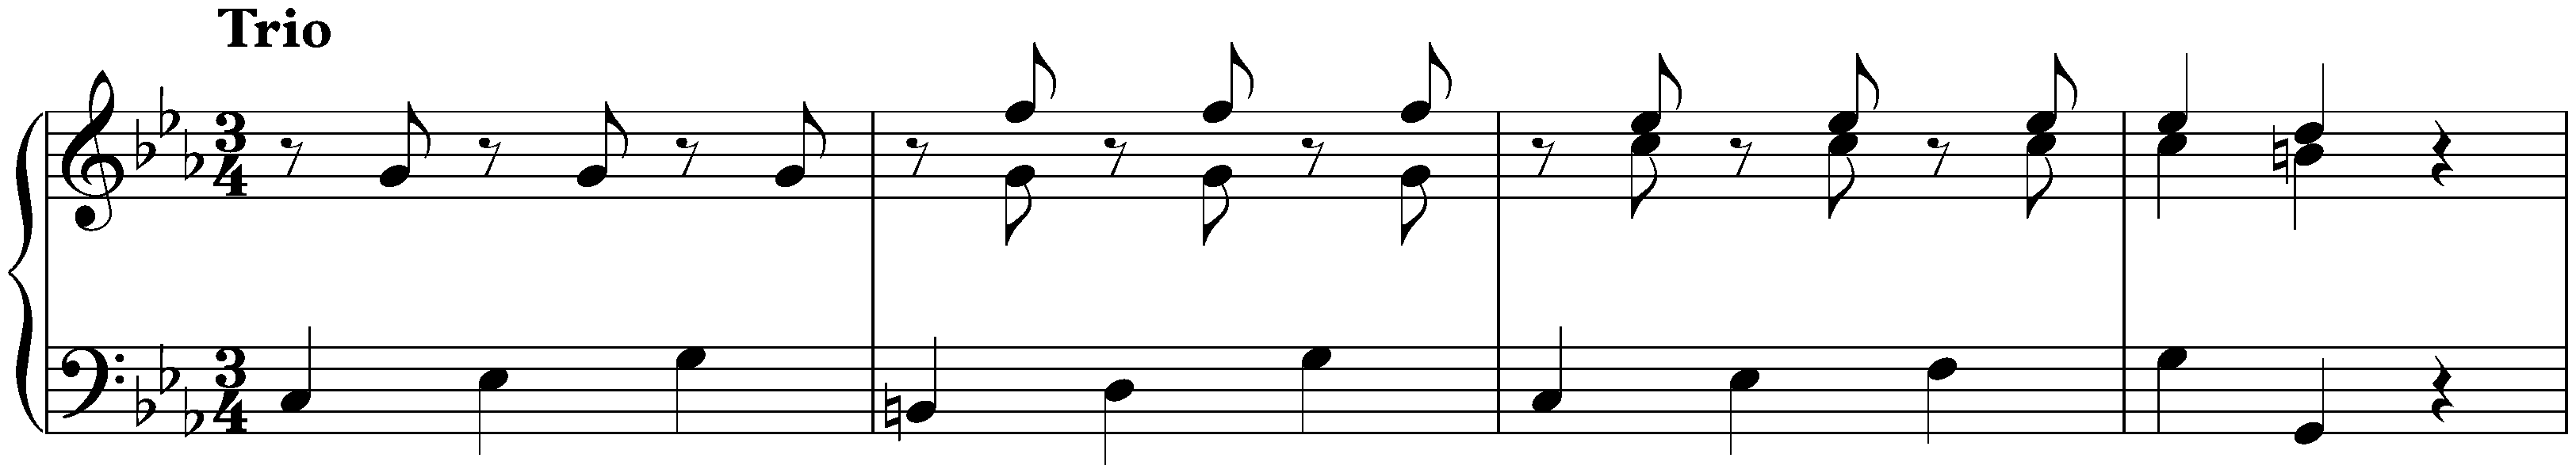 Sonata in E-flat major, Hob. XVI:16; 2. Menuet – Trio